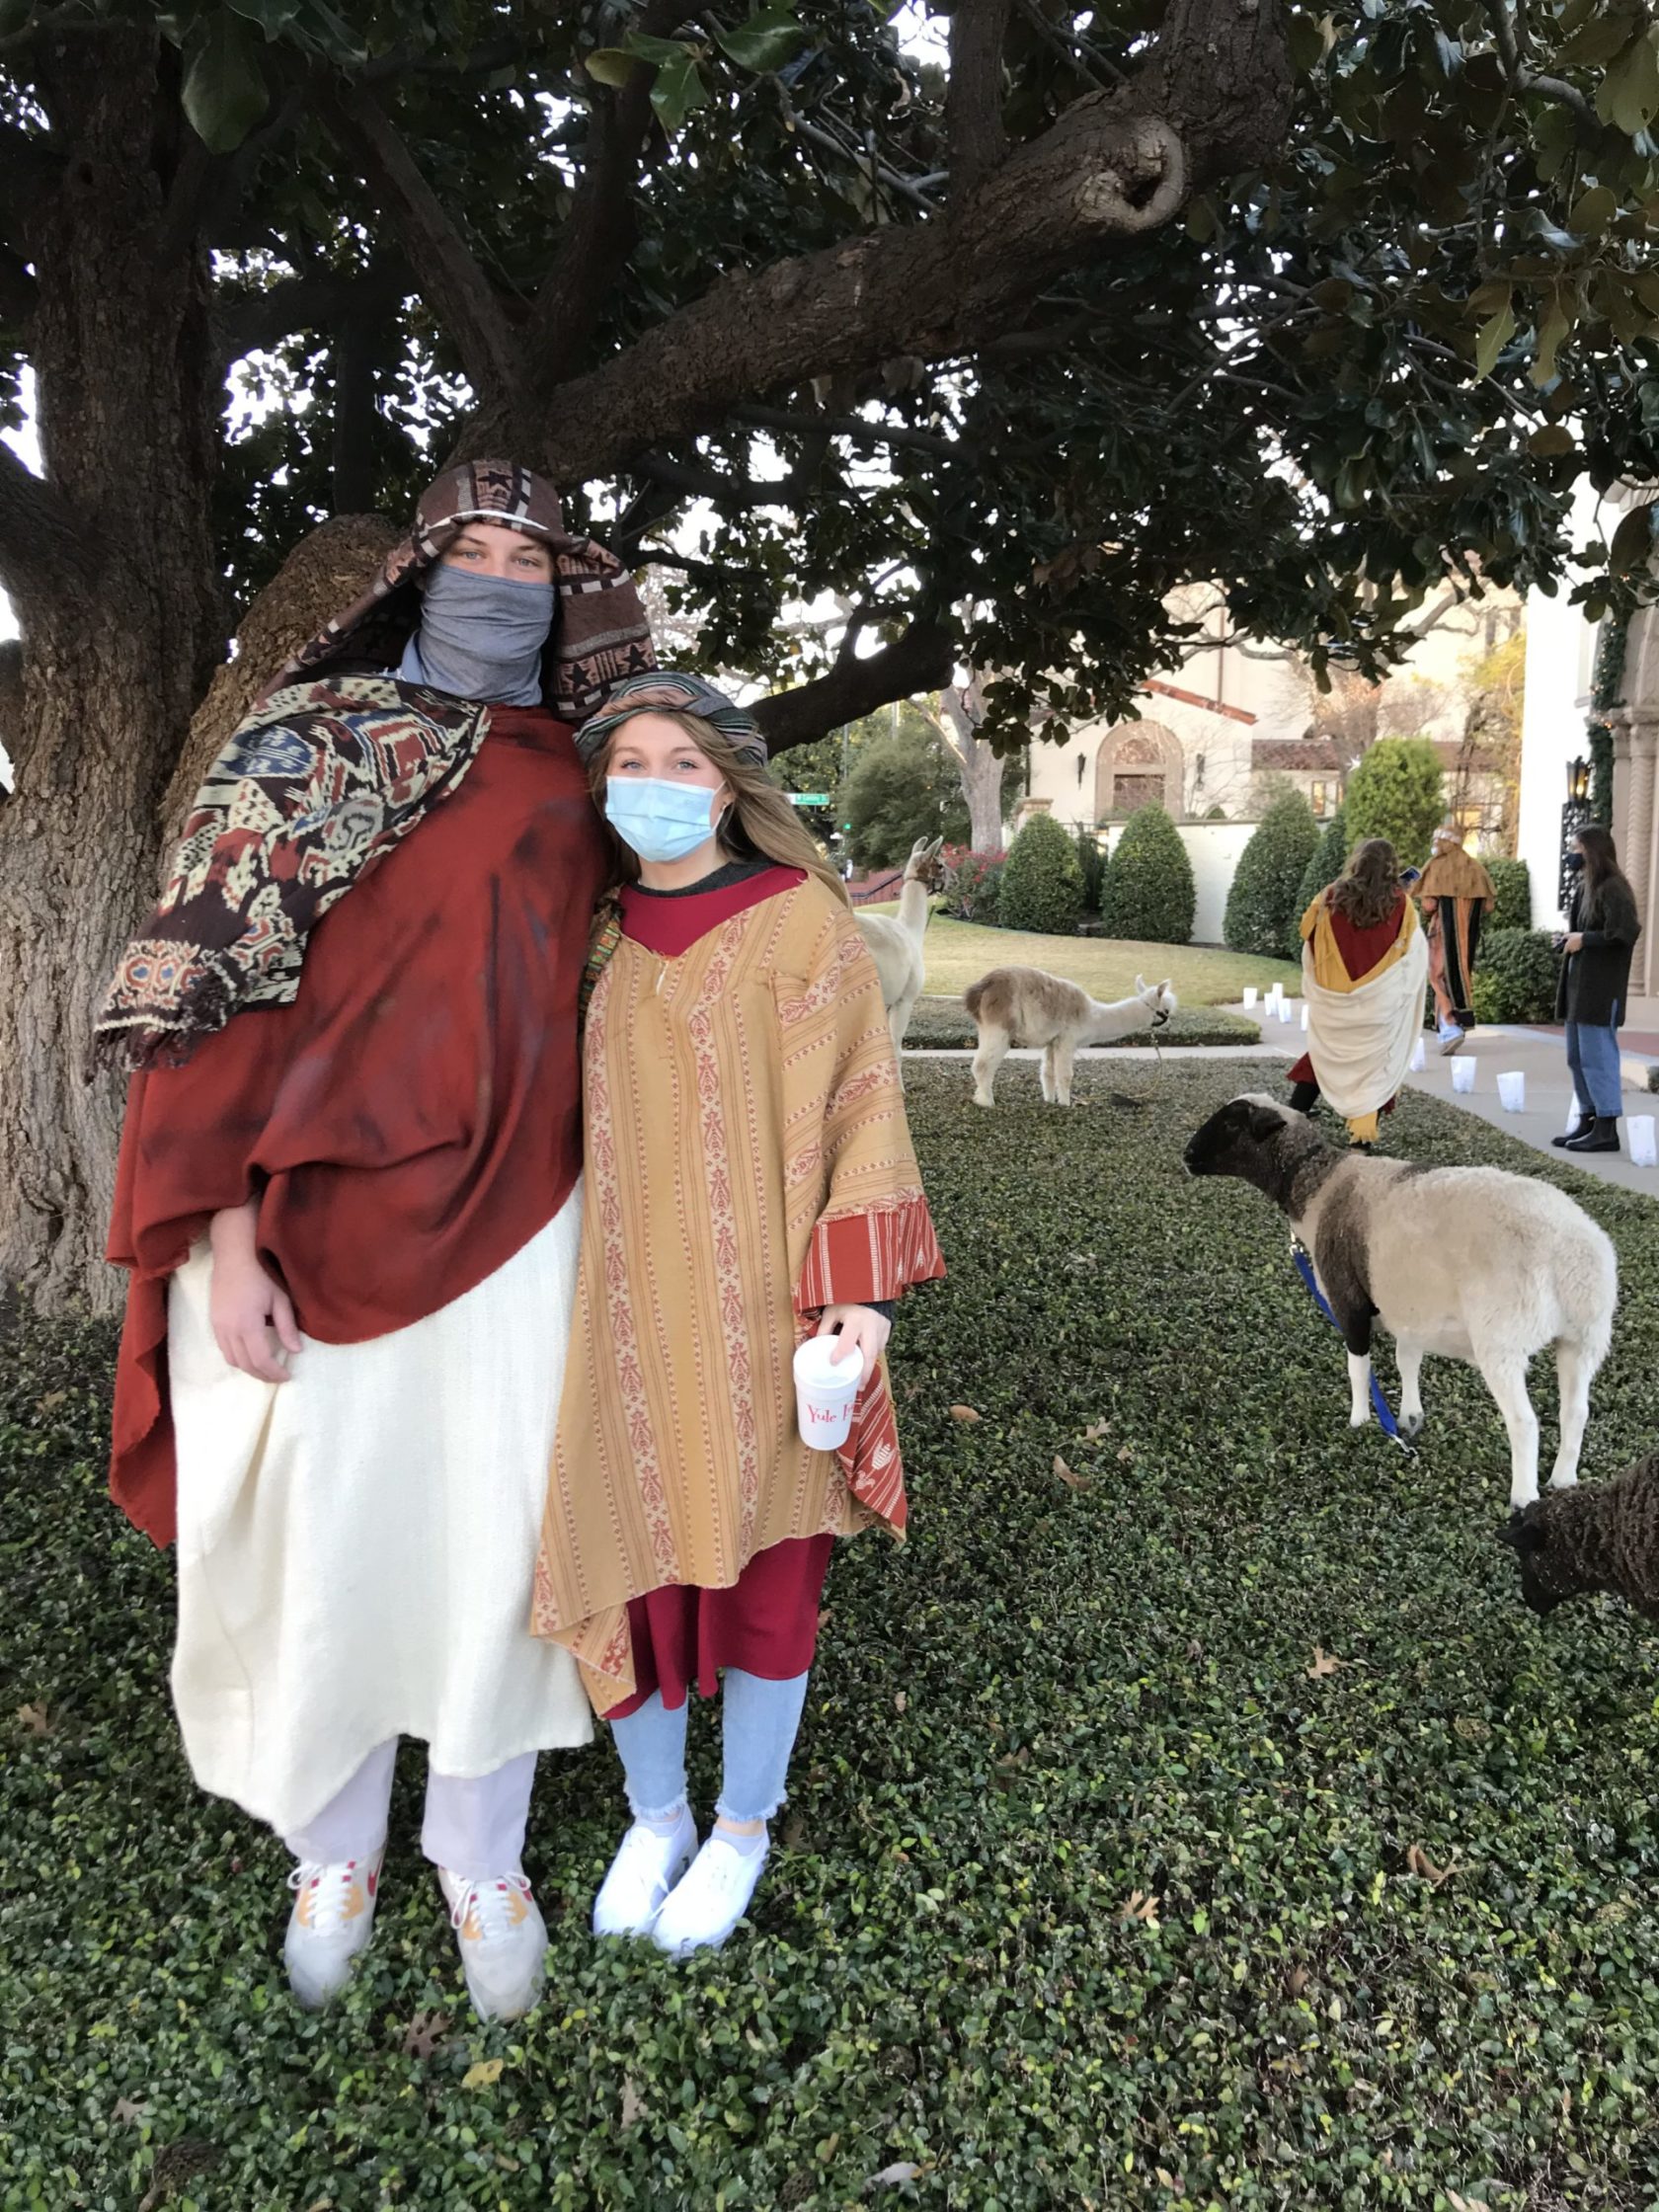 Journey to Bethlehem: A Live Nativity Experience